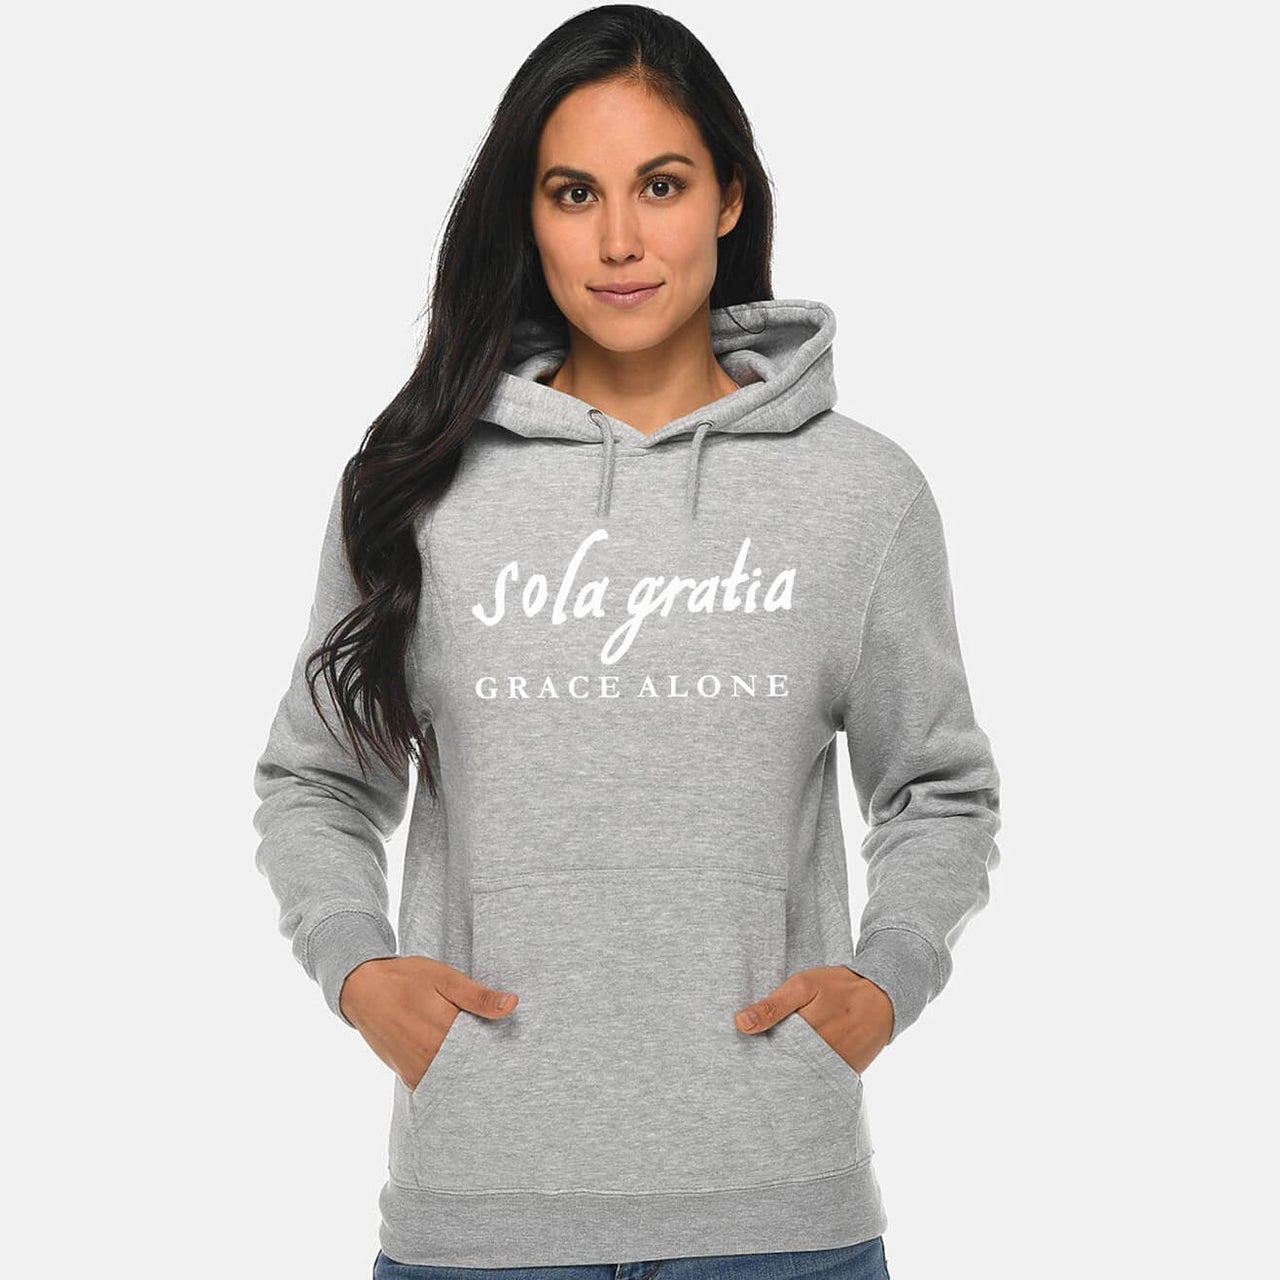 Sola Gratia Grace Alone Unisex Sweatshirt Hoodie